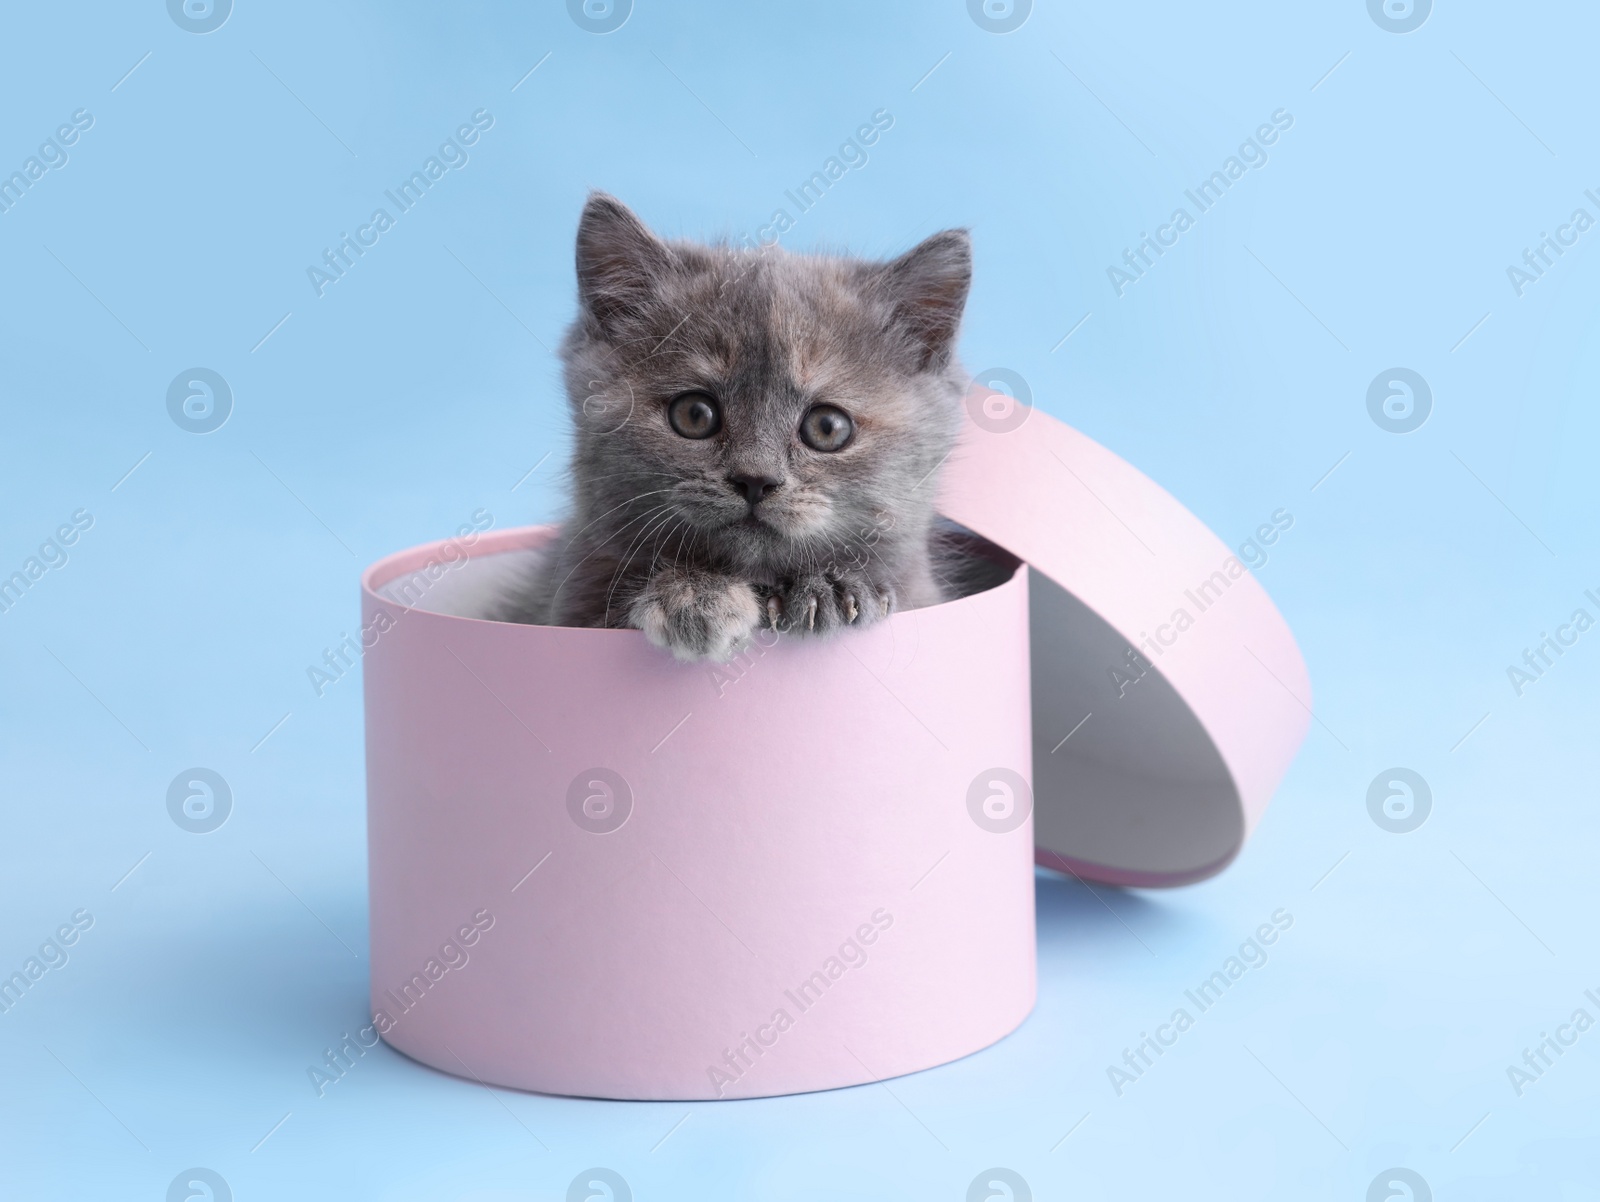 Photo of Cute little grey kitten in pink box on light blue background